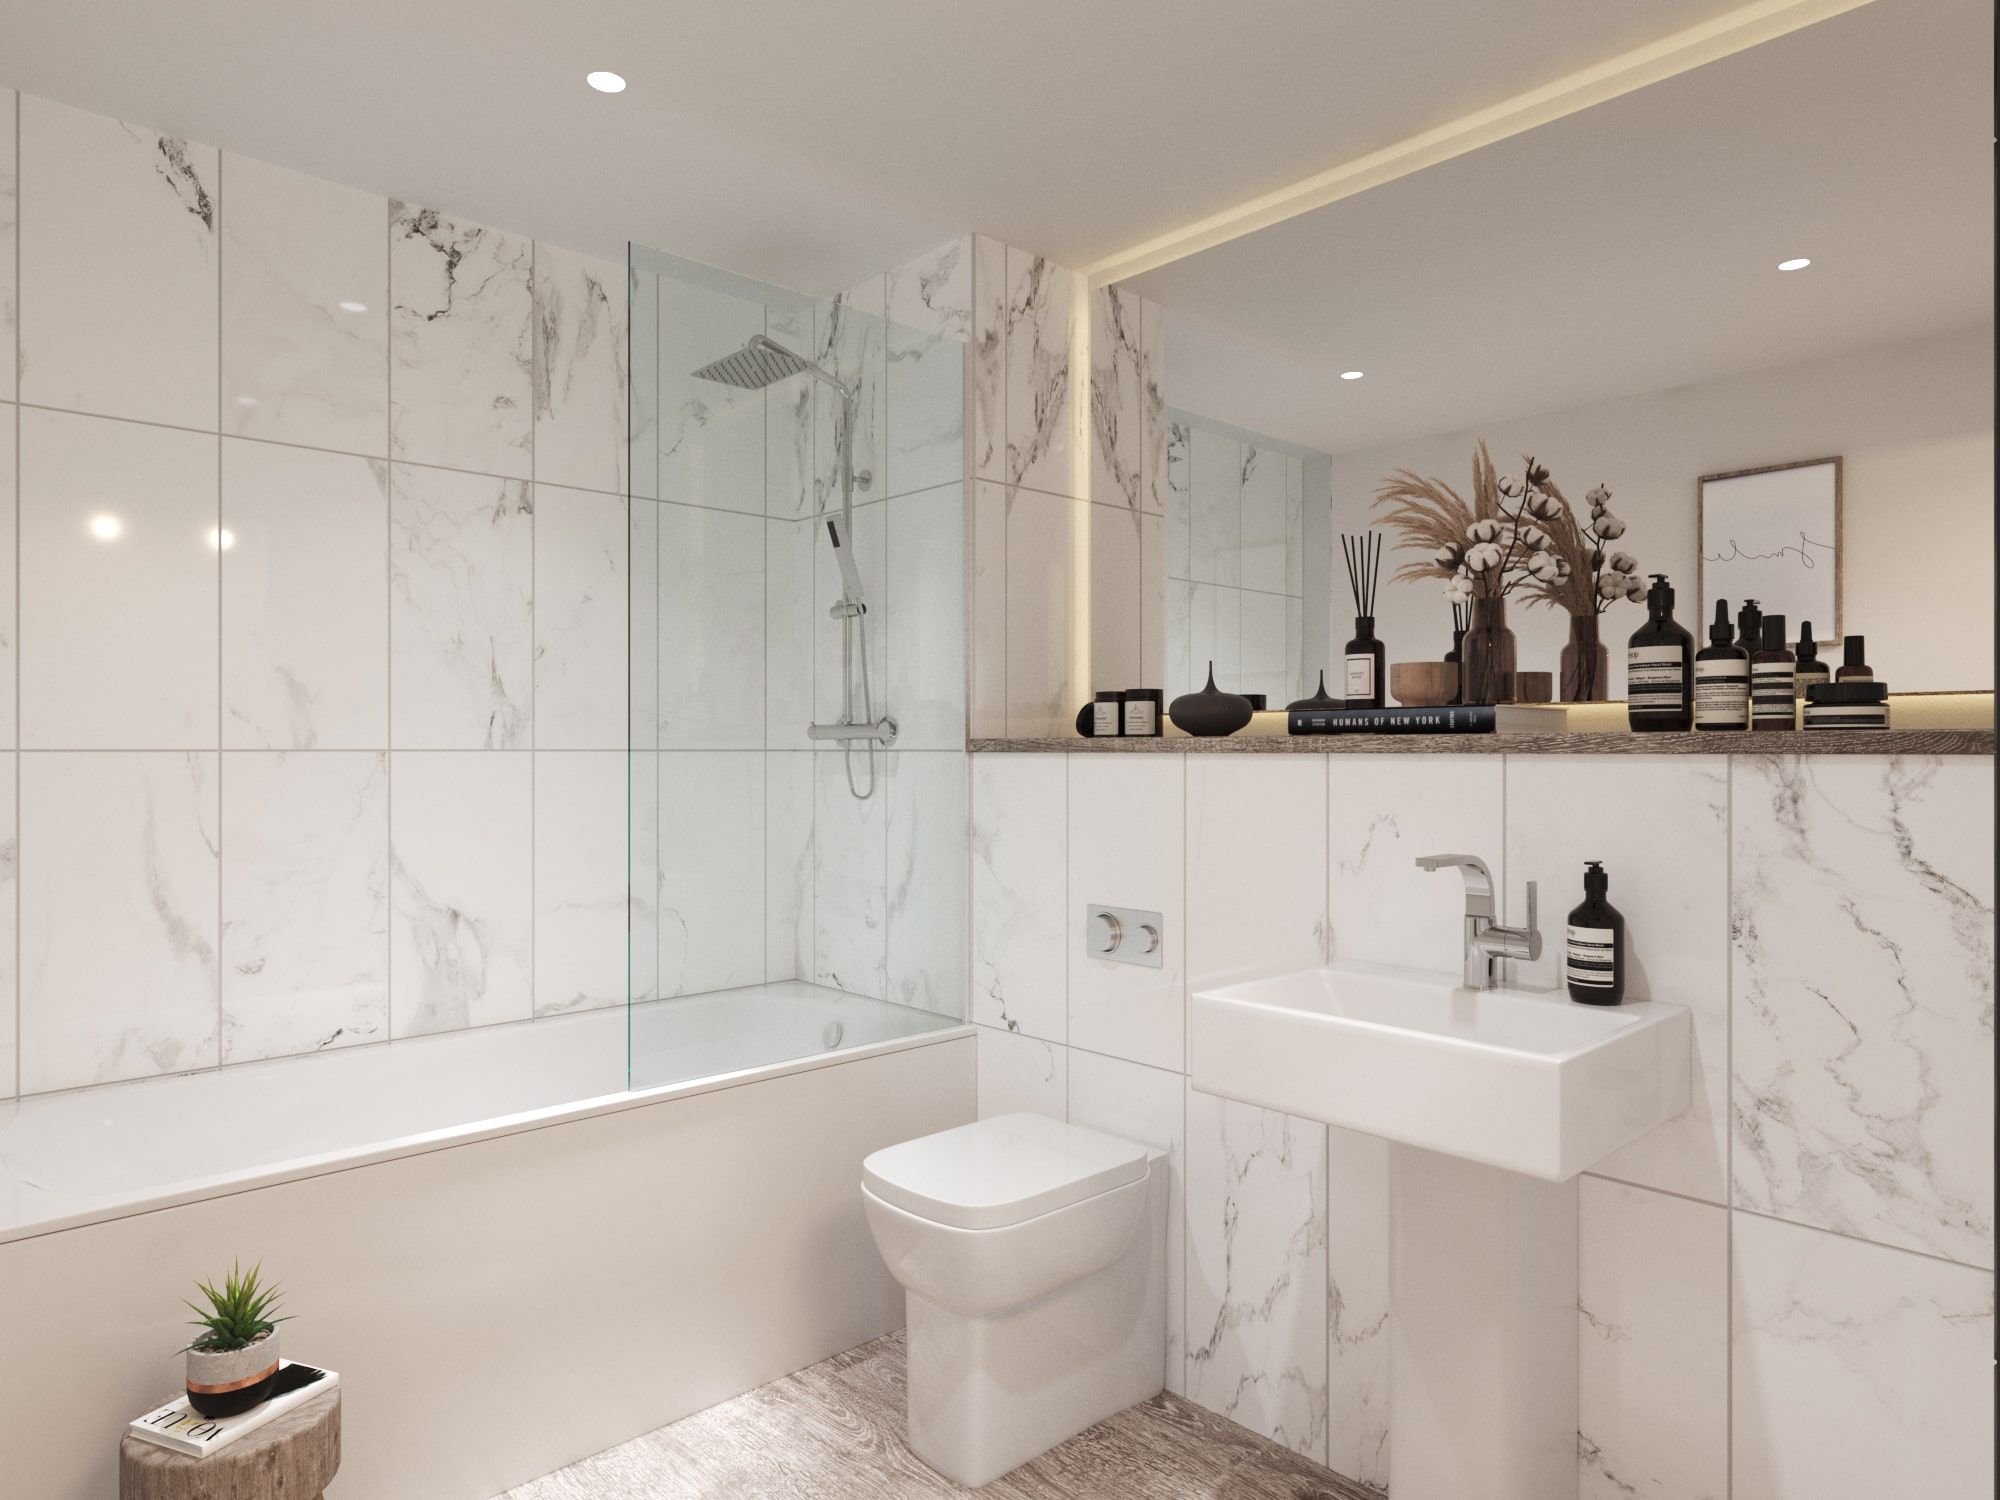 BA_South_Central_birmingham_property_visualisation_Bathroom-min